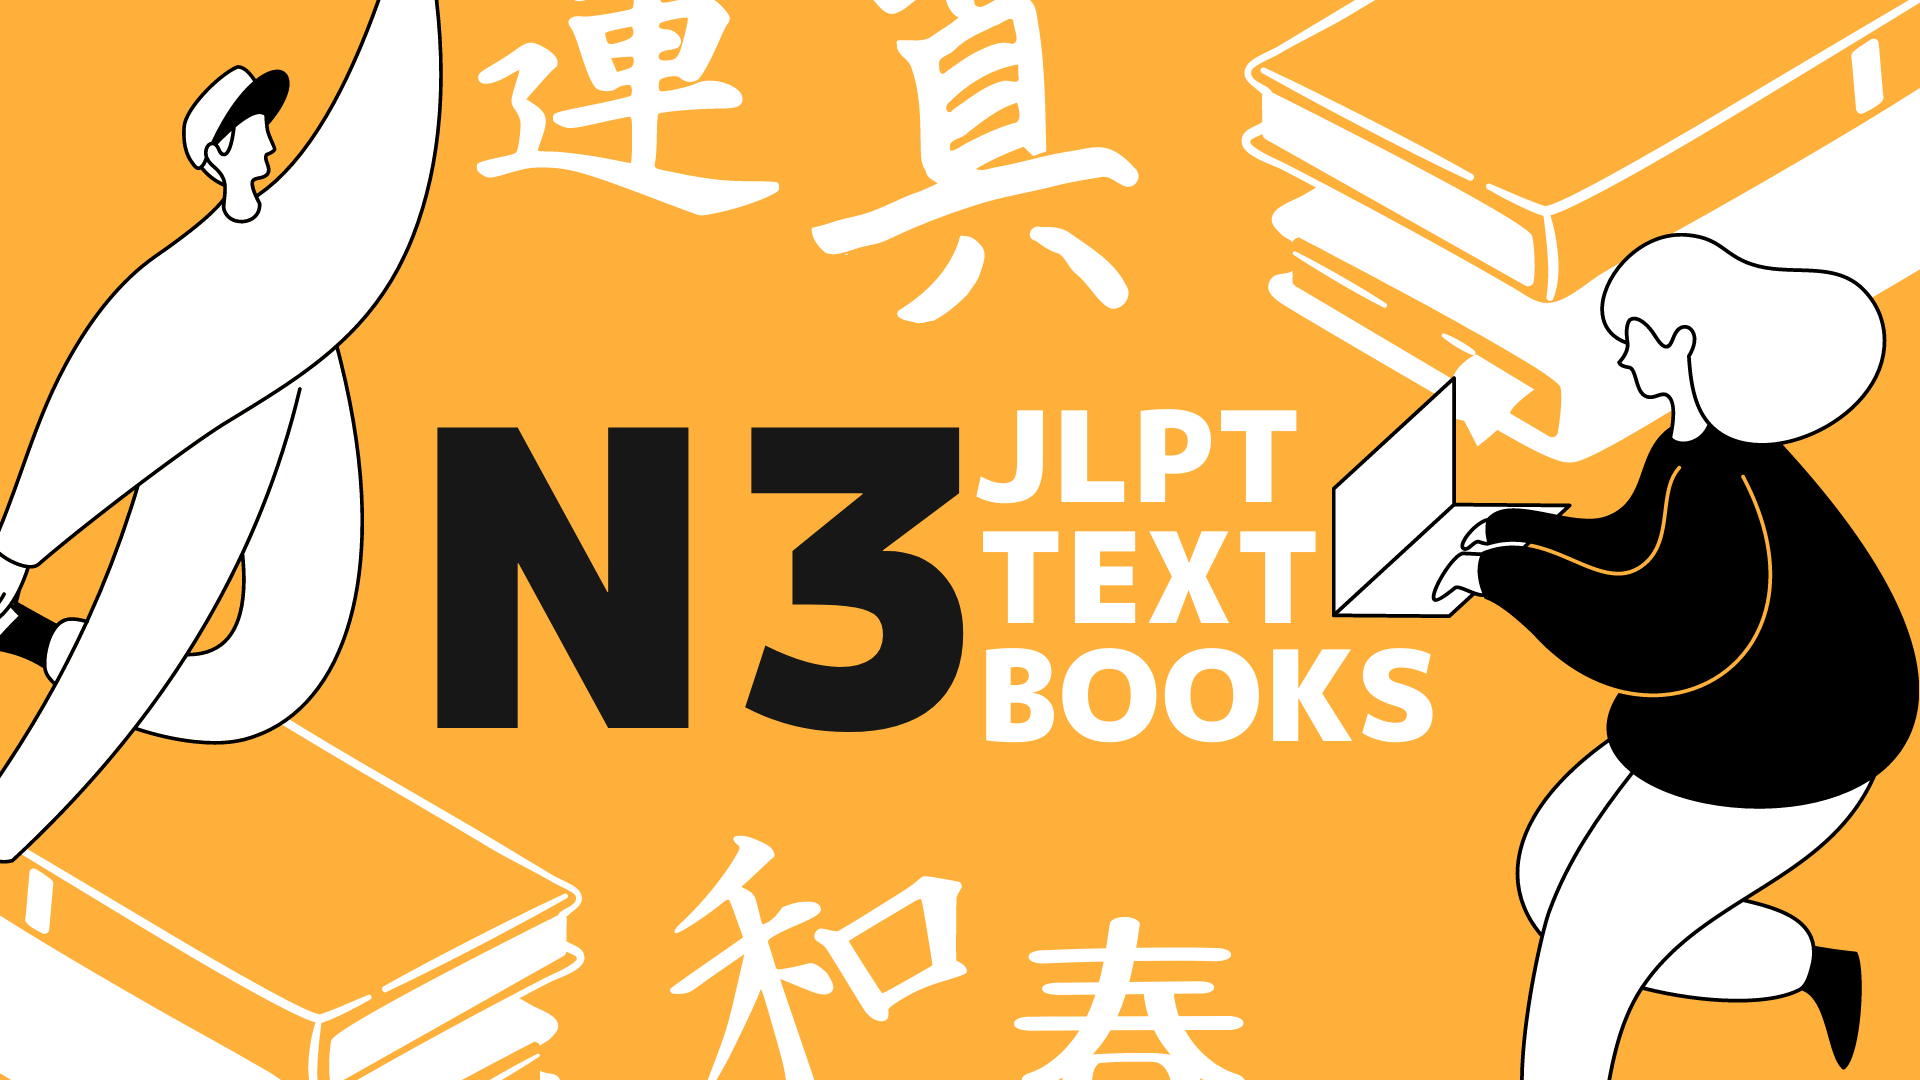 JLPT N4 N5 Japanese Language Matome TEST Complete 2 SET